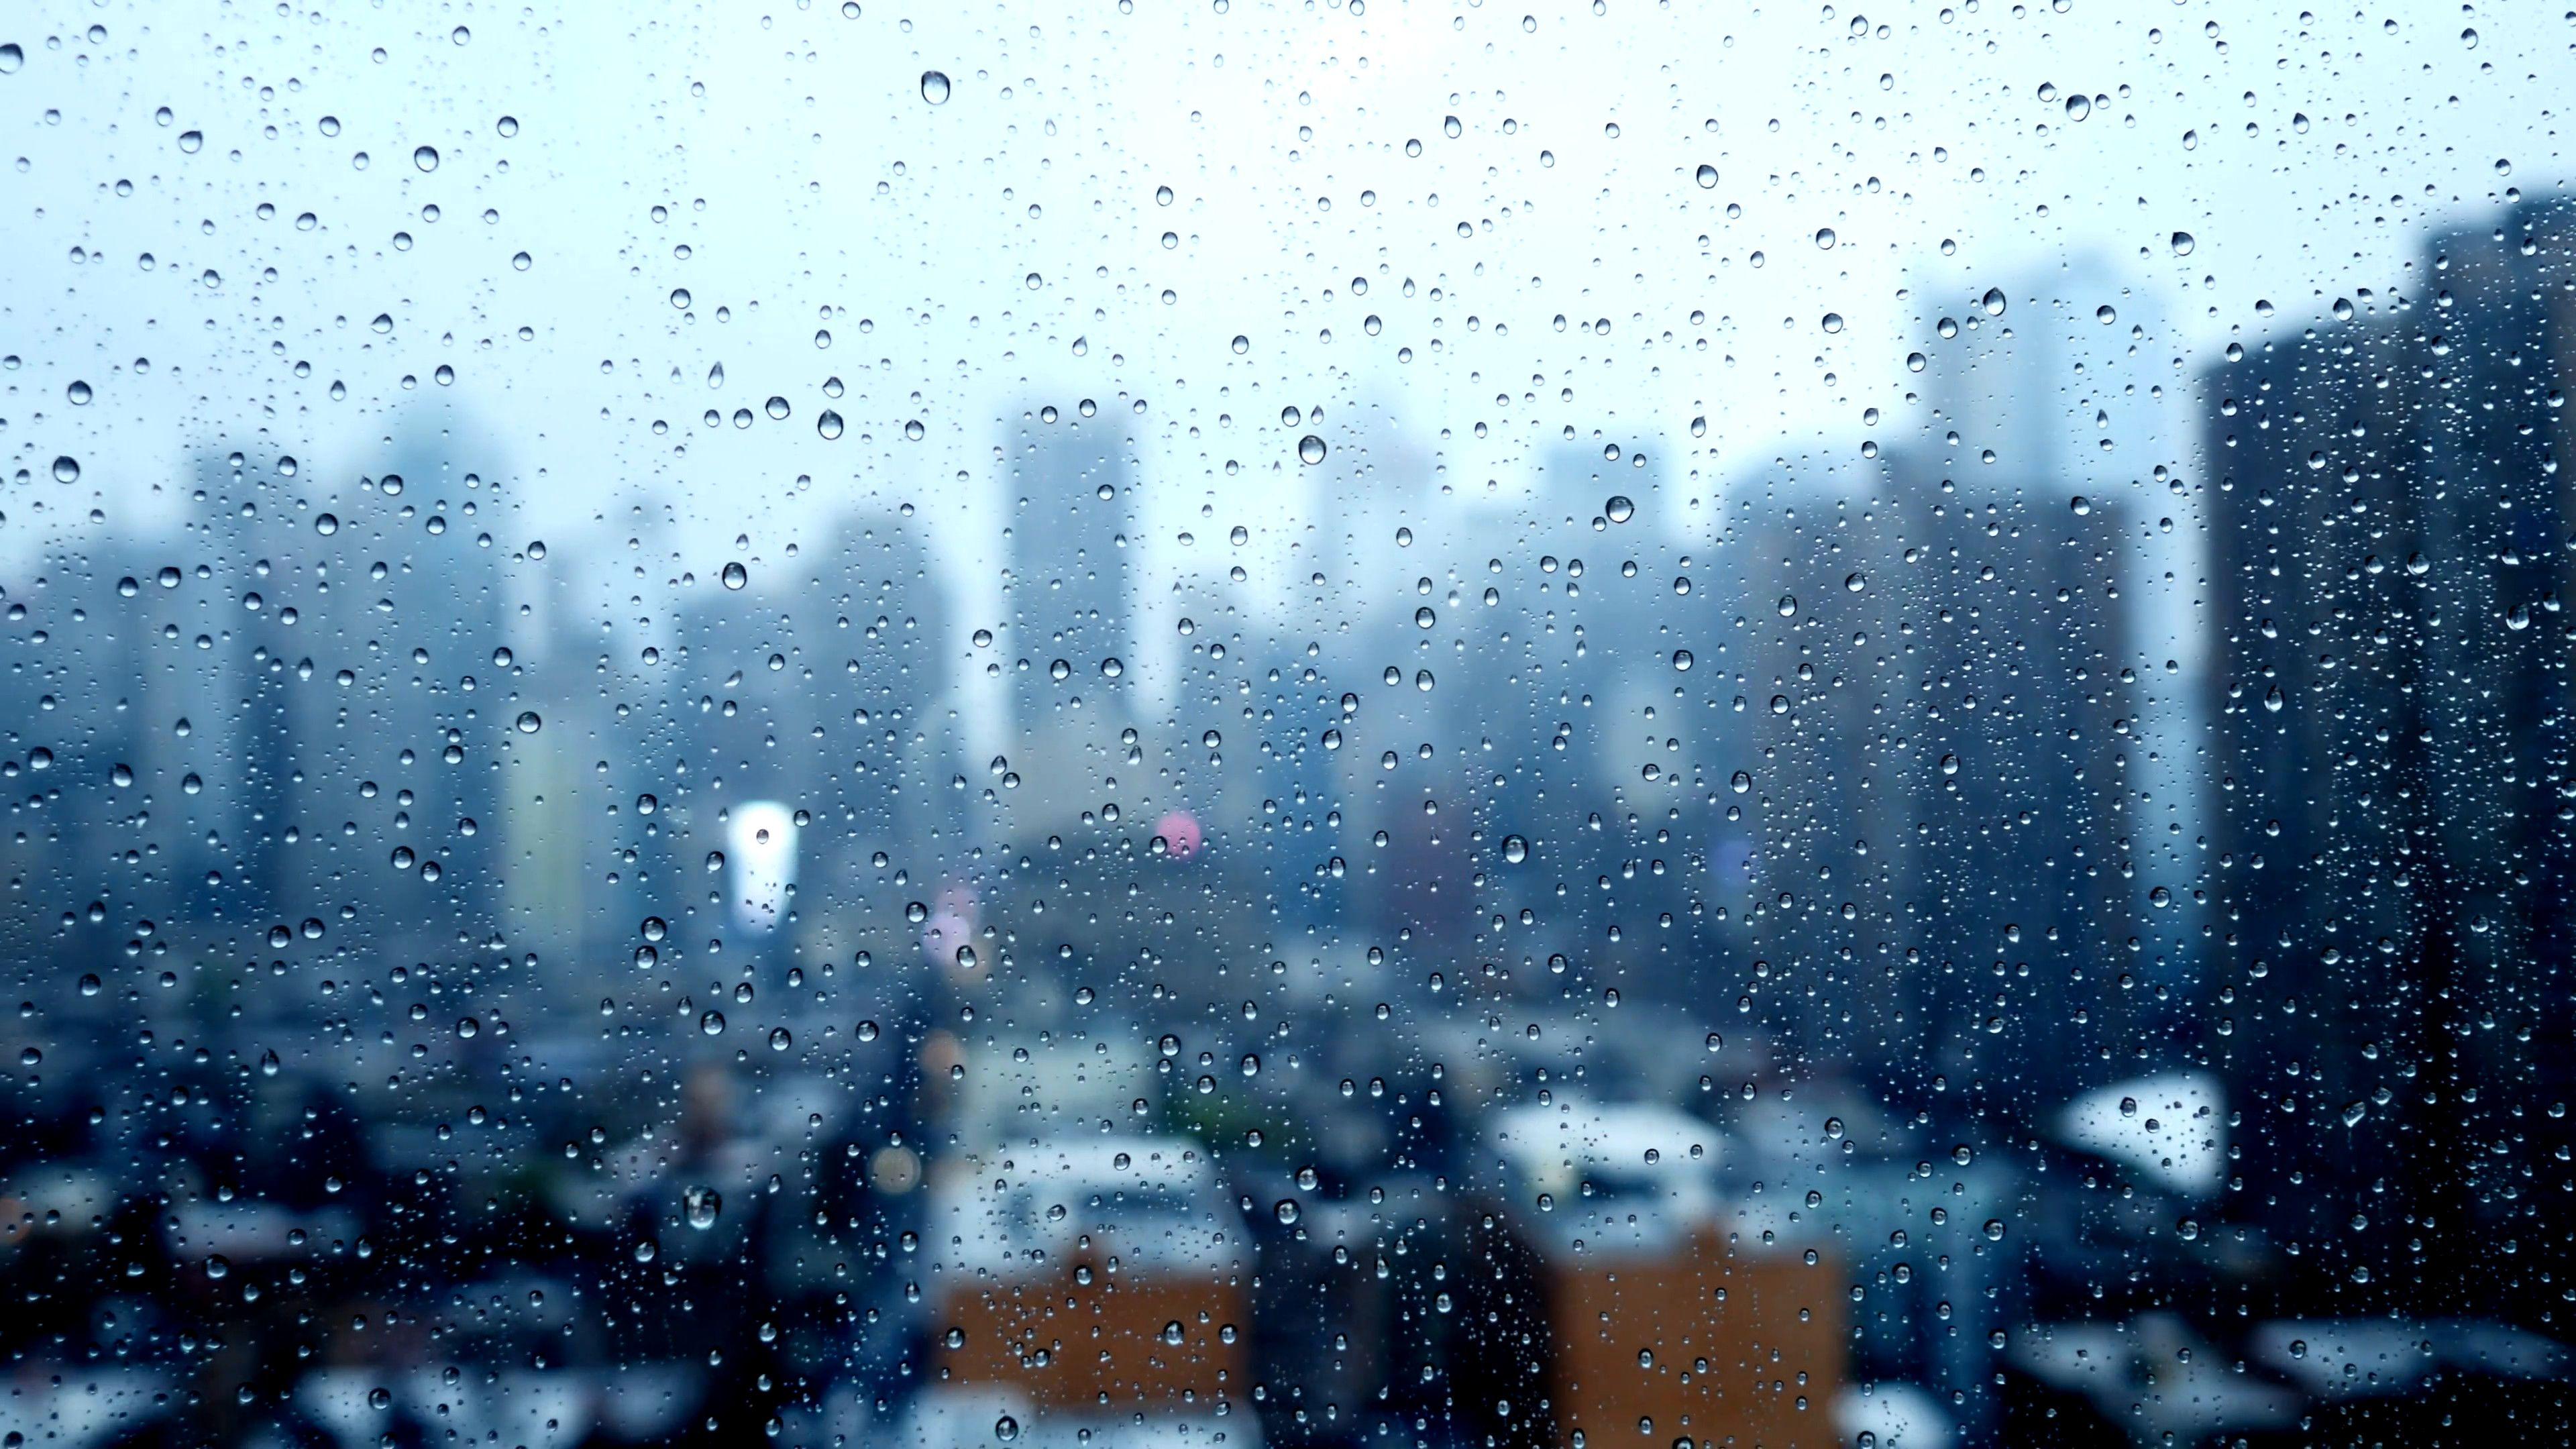 Sad Rain Wallpapers - Top Free Sad Rain Backgrounds ...